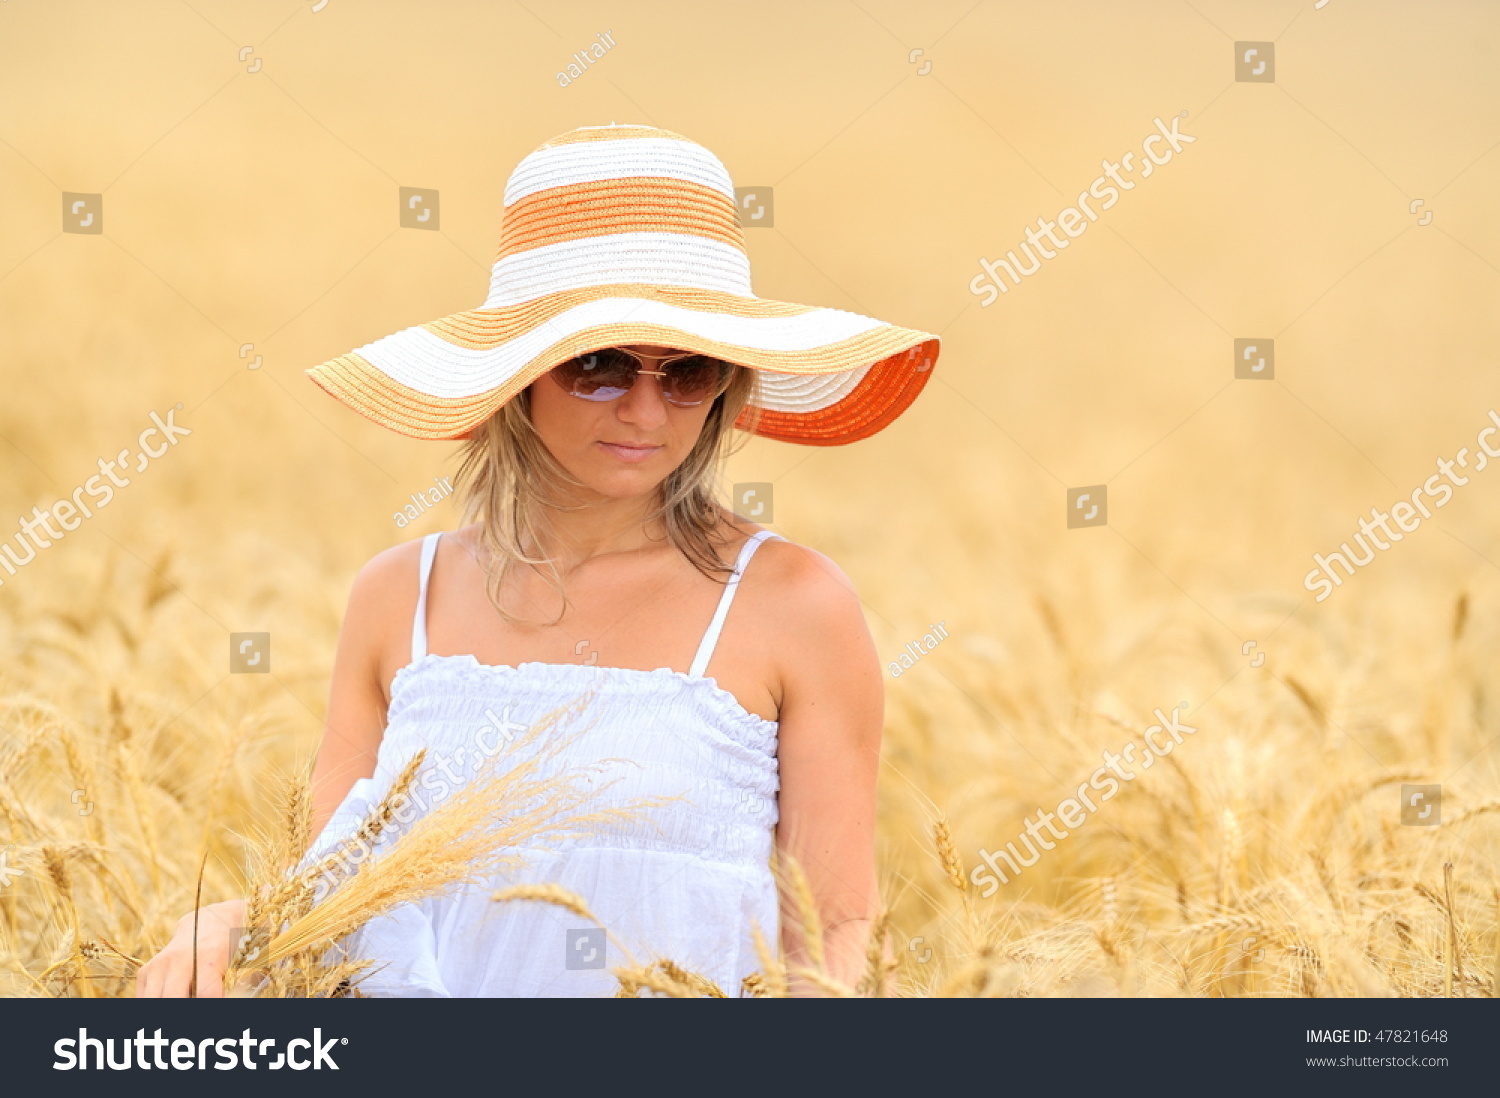 Young Beautiful Woman Golden Wheat Field Stock Photo 47821648 ...